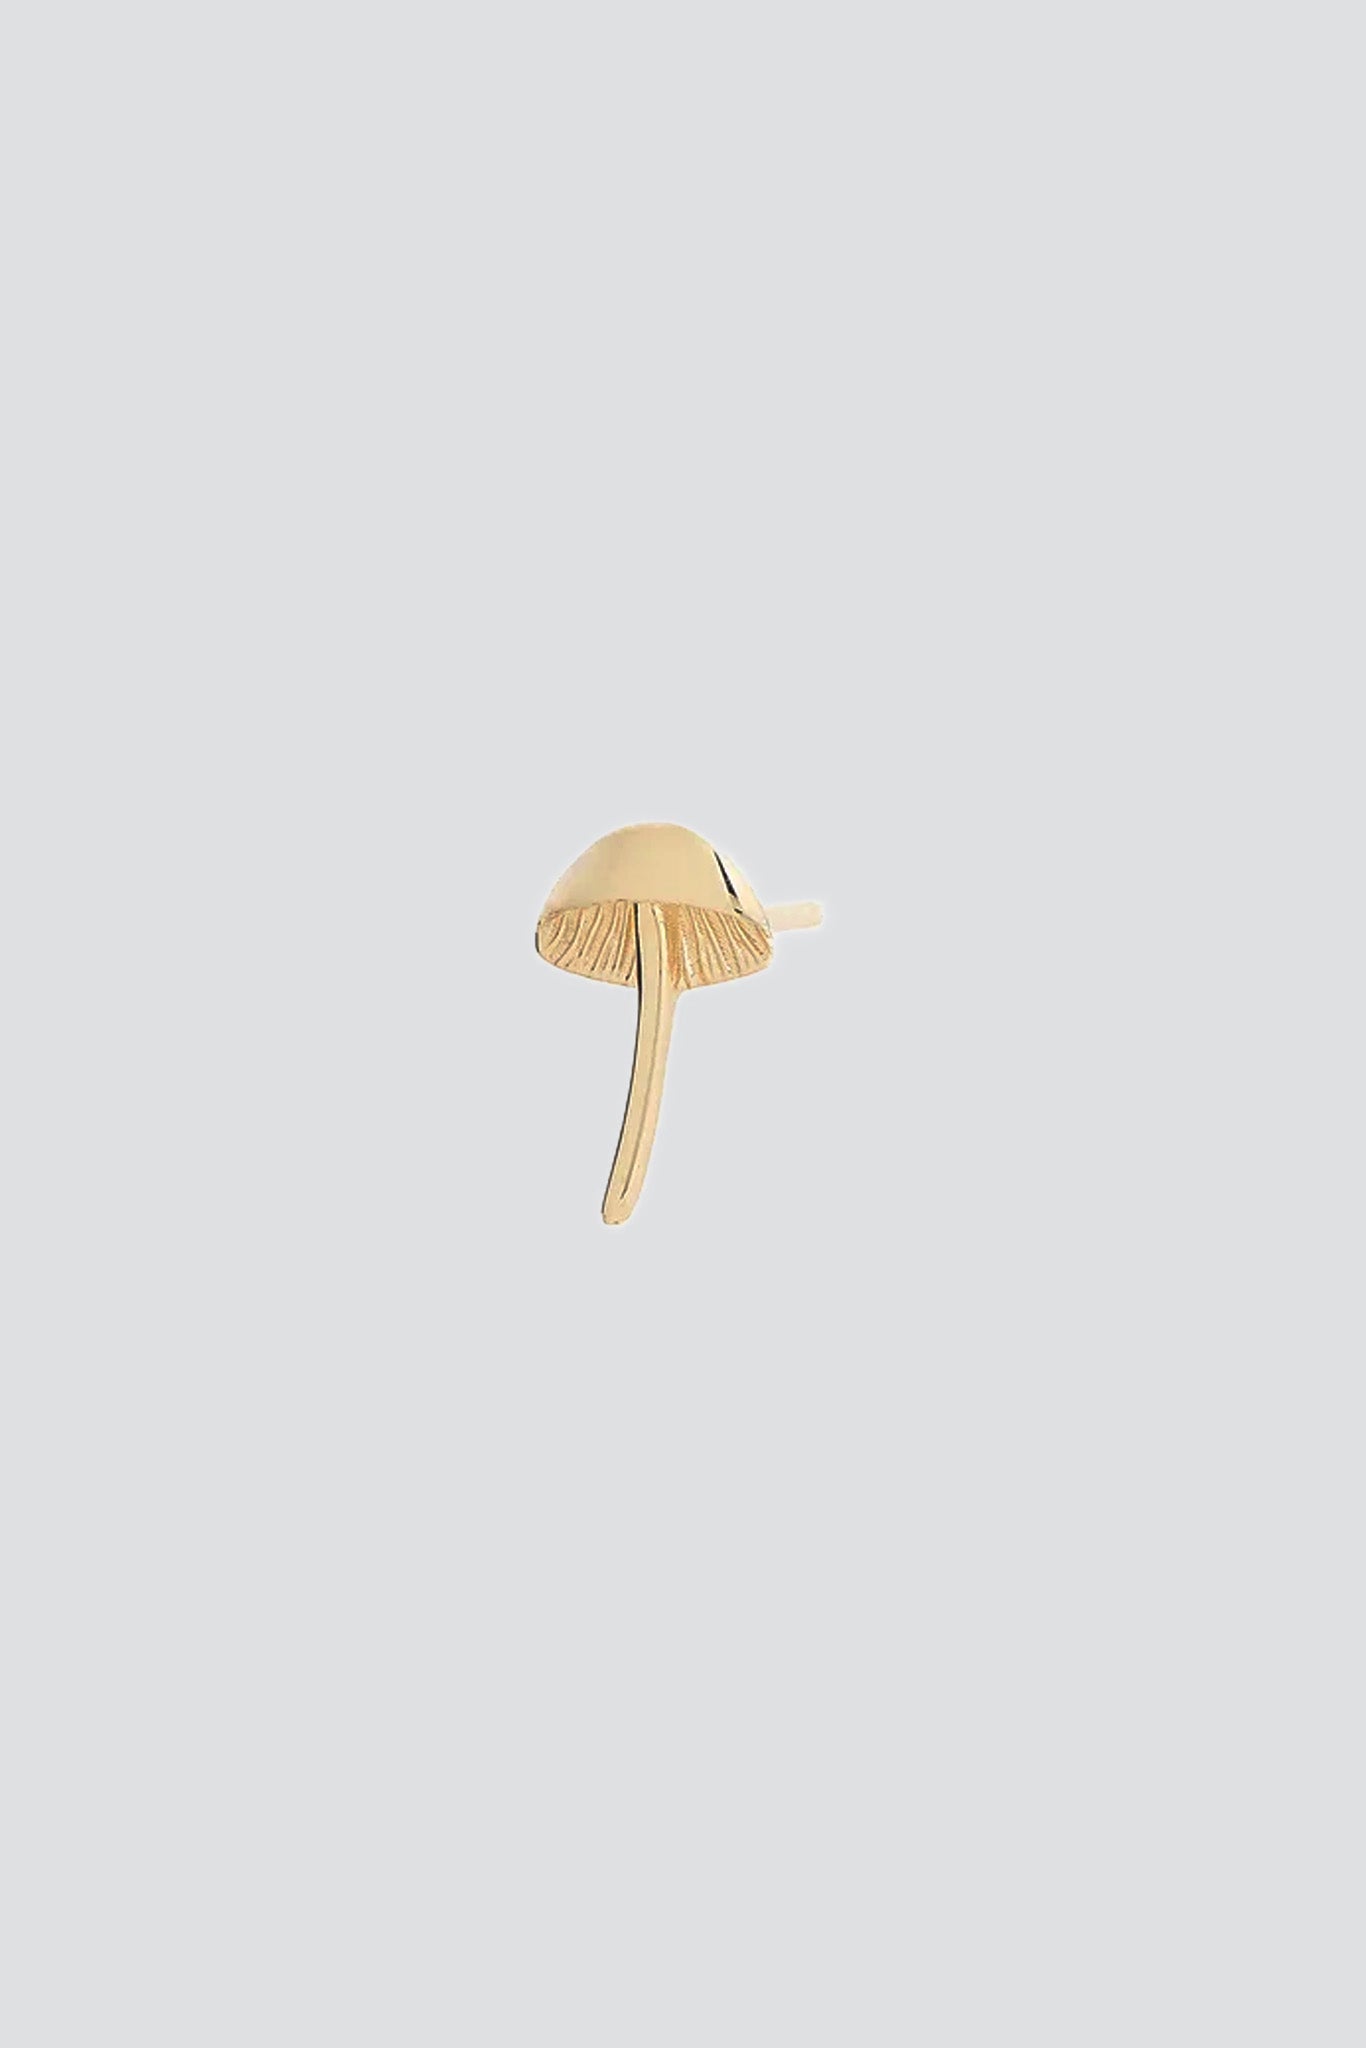 Gold Itty Bitty Mushroom Earring Stud